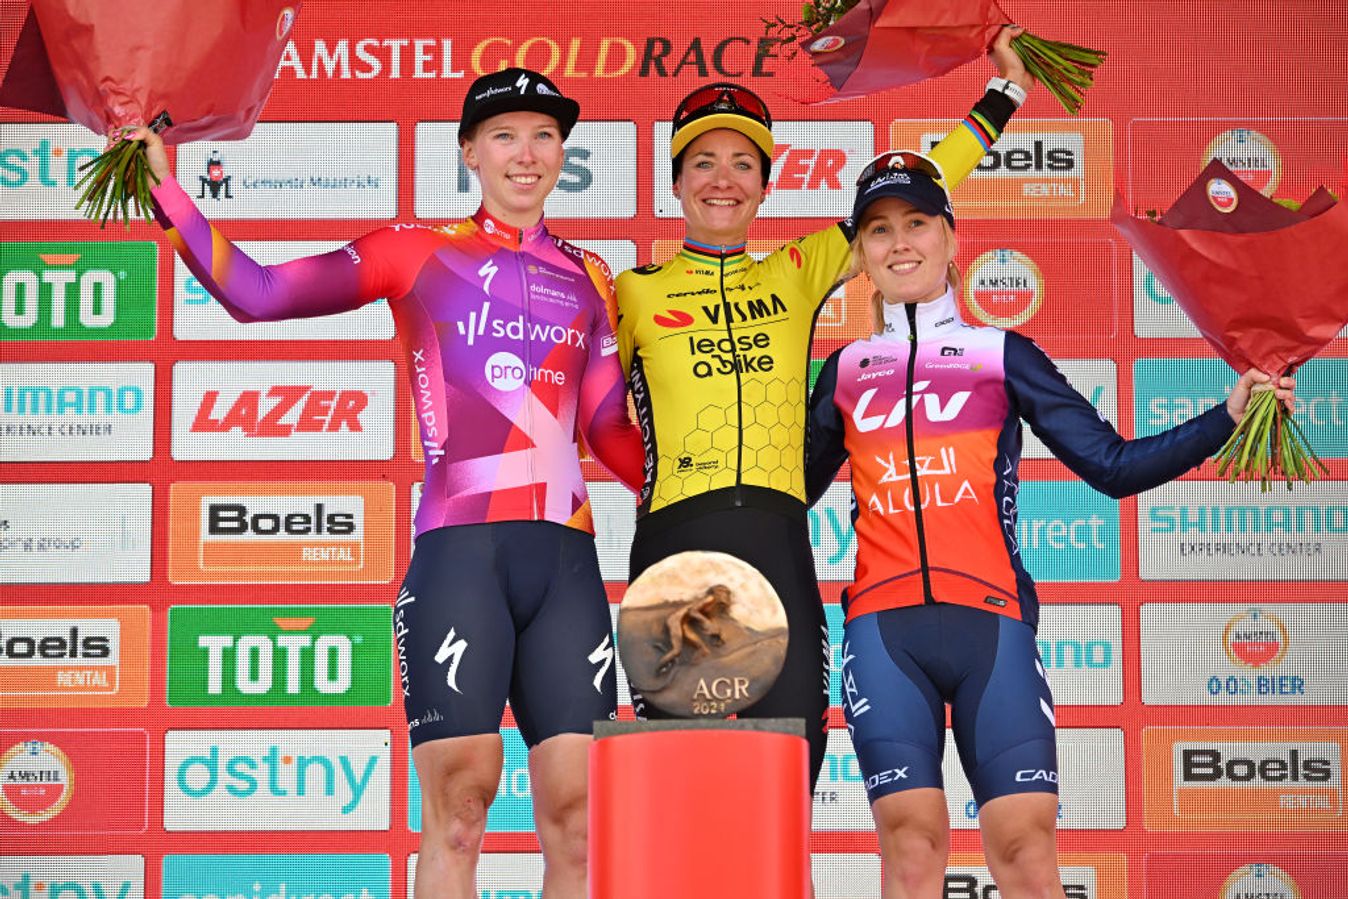 Ingvild Gåskjenn in esteemed company on the Amstel Gold Race podium